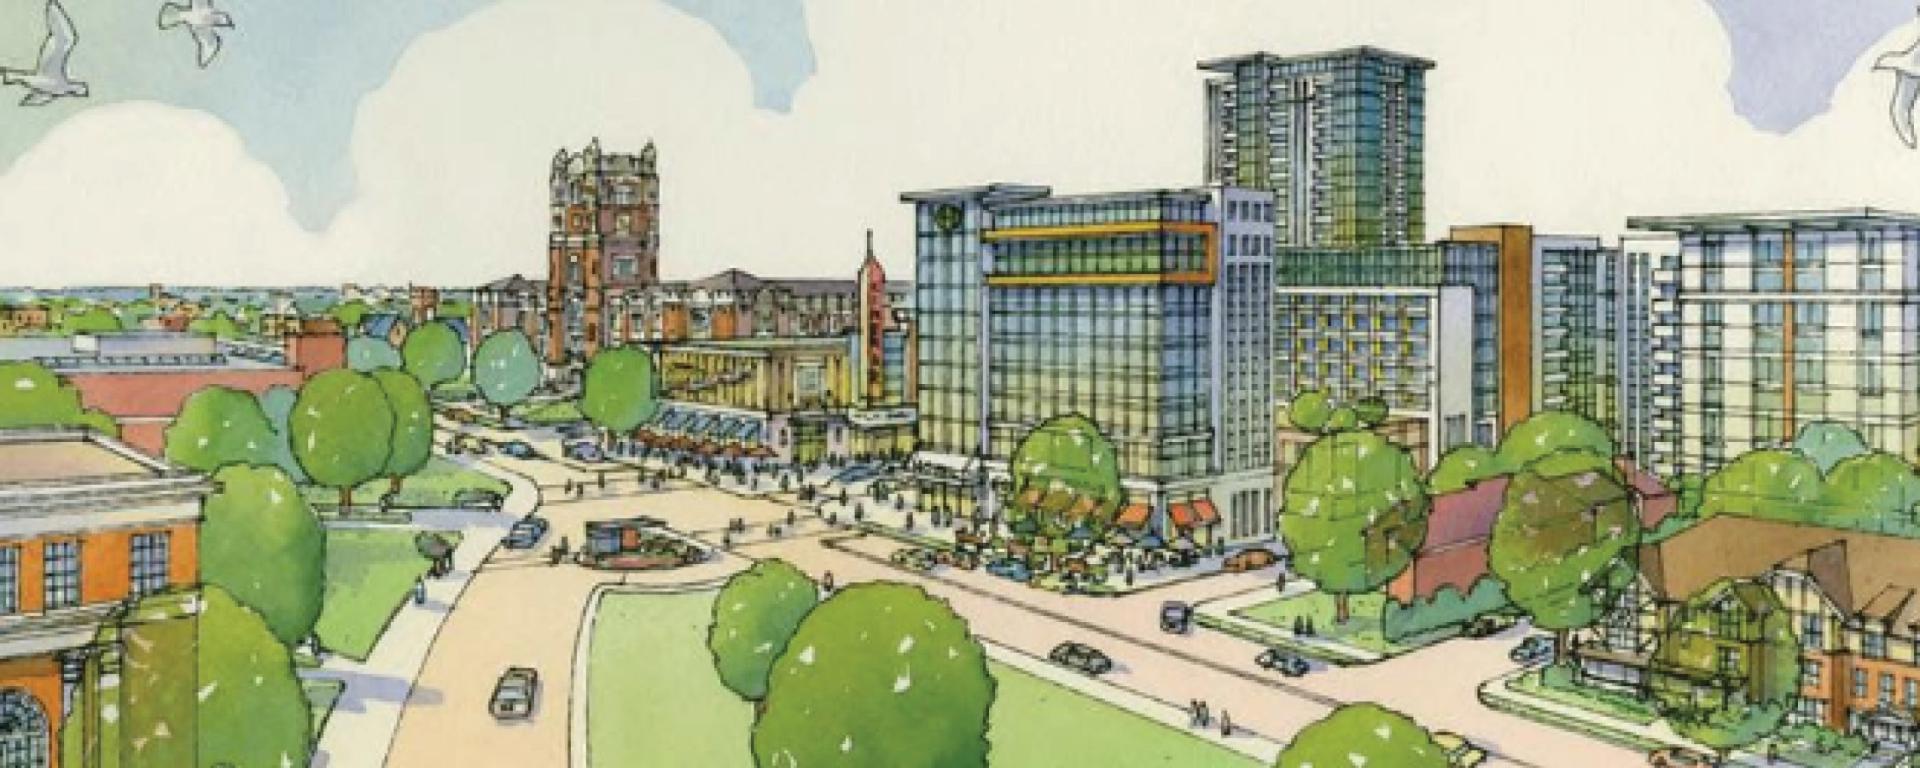 illustration of mixed use development streetscape